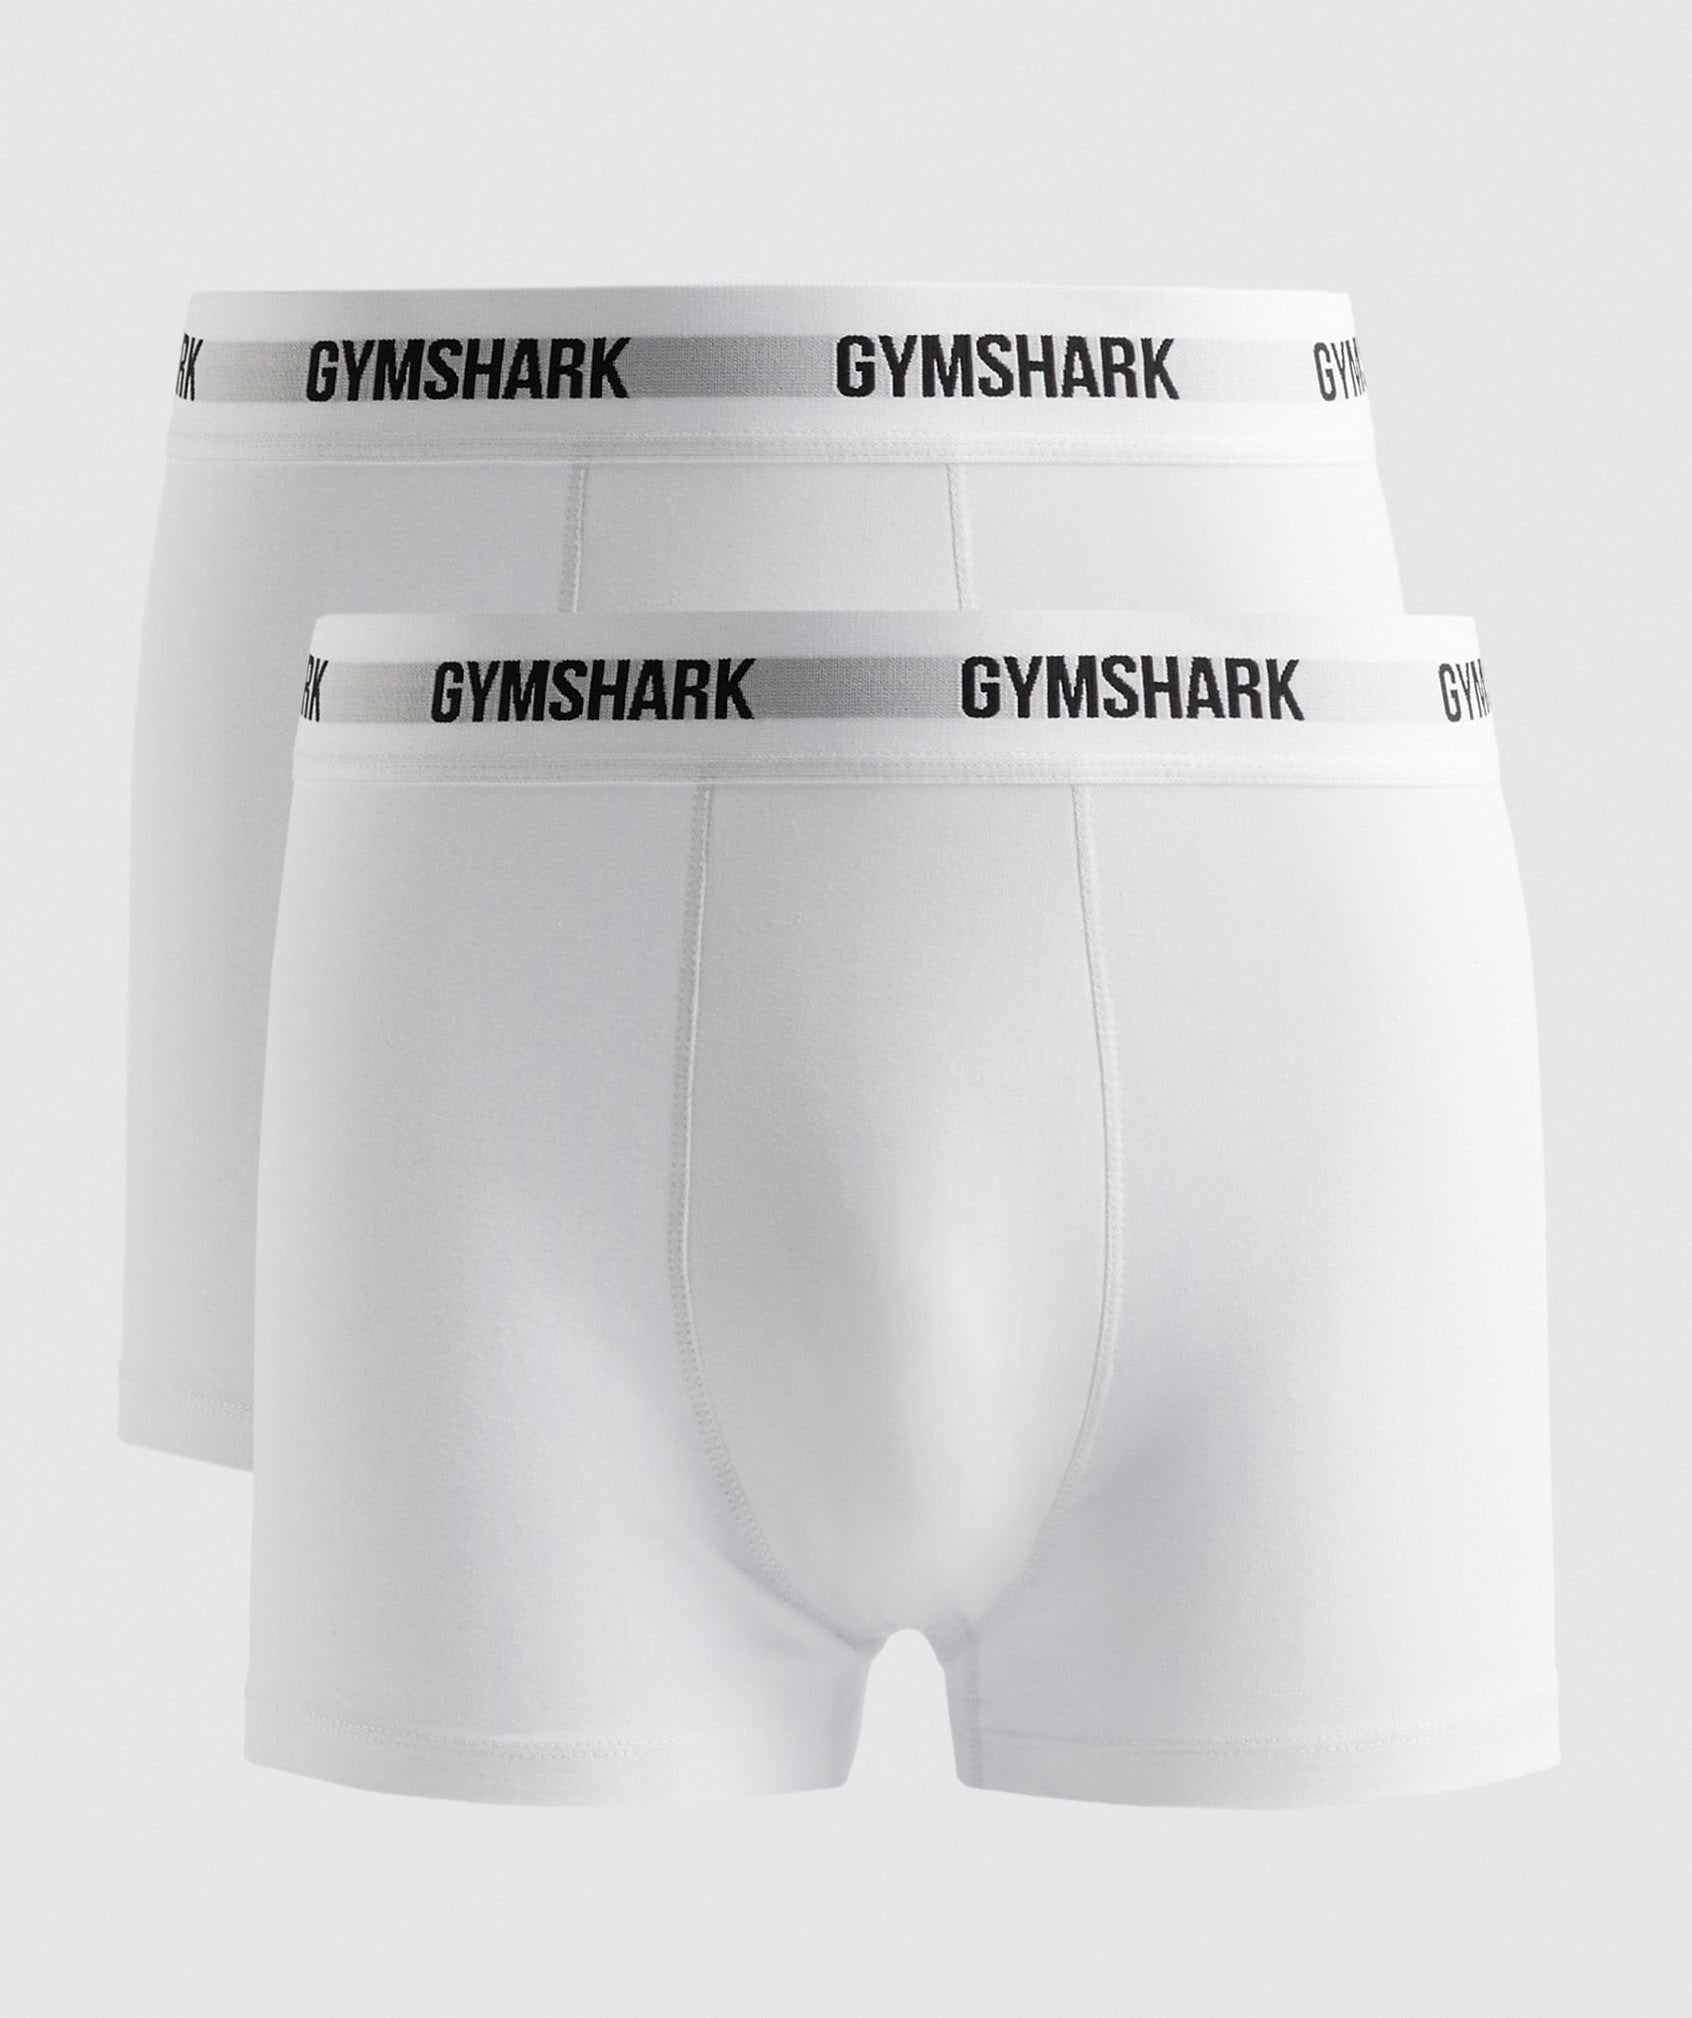 Gymshark Boxers 5 PK - Black